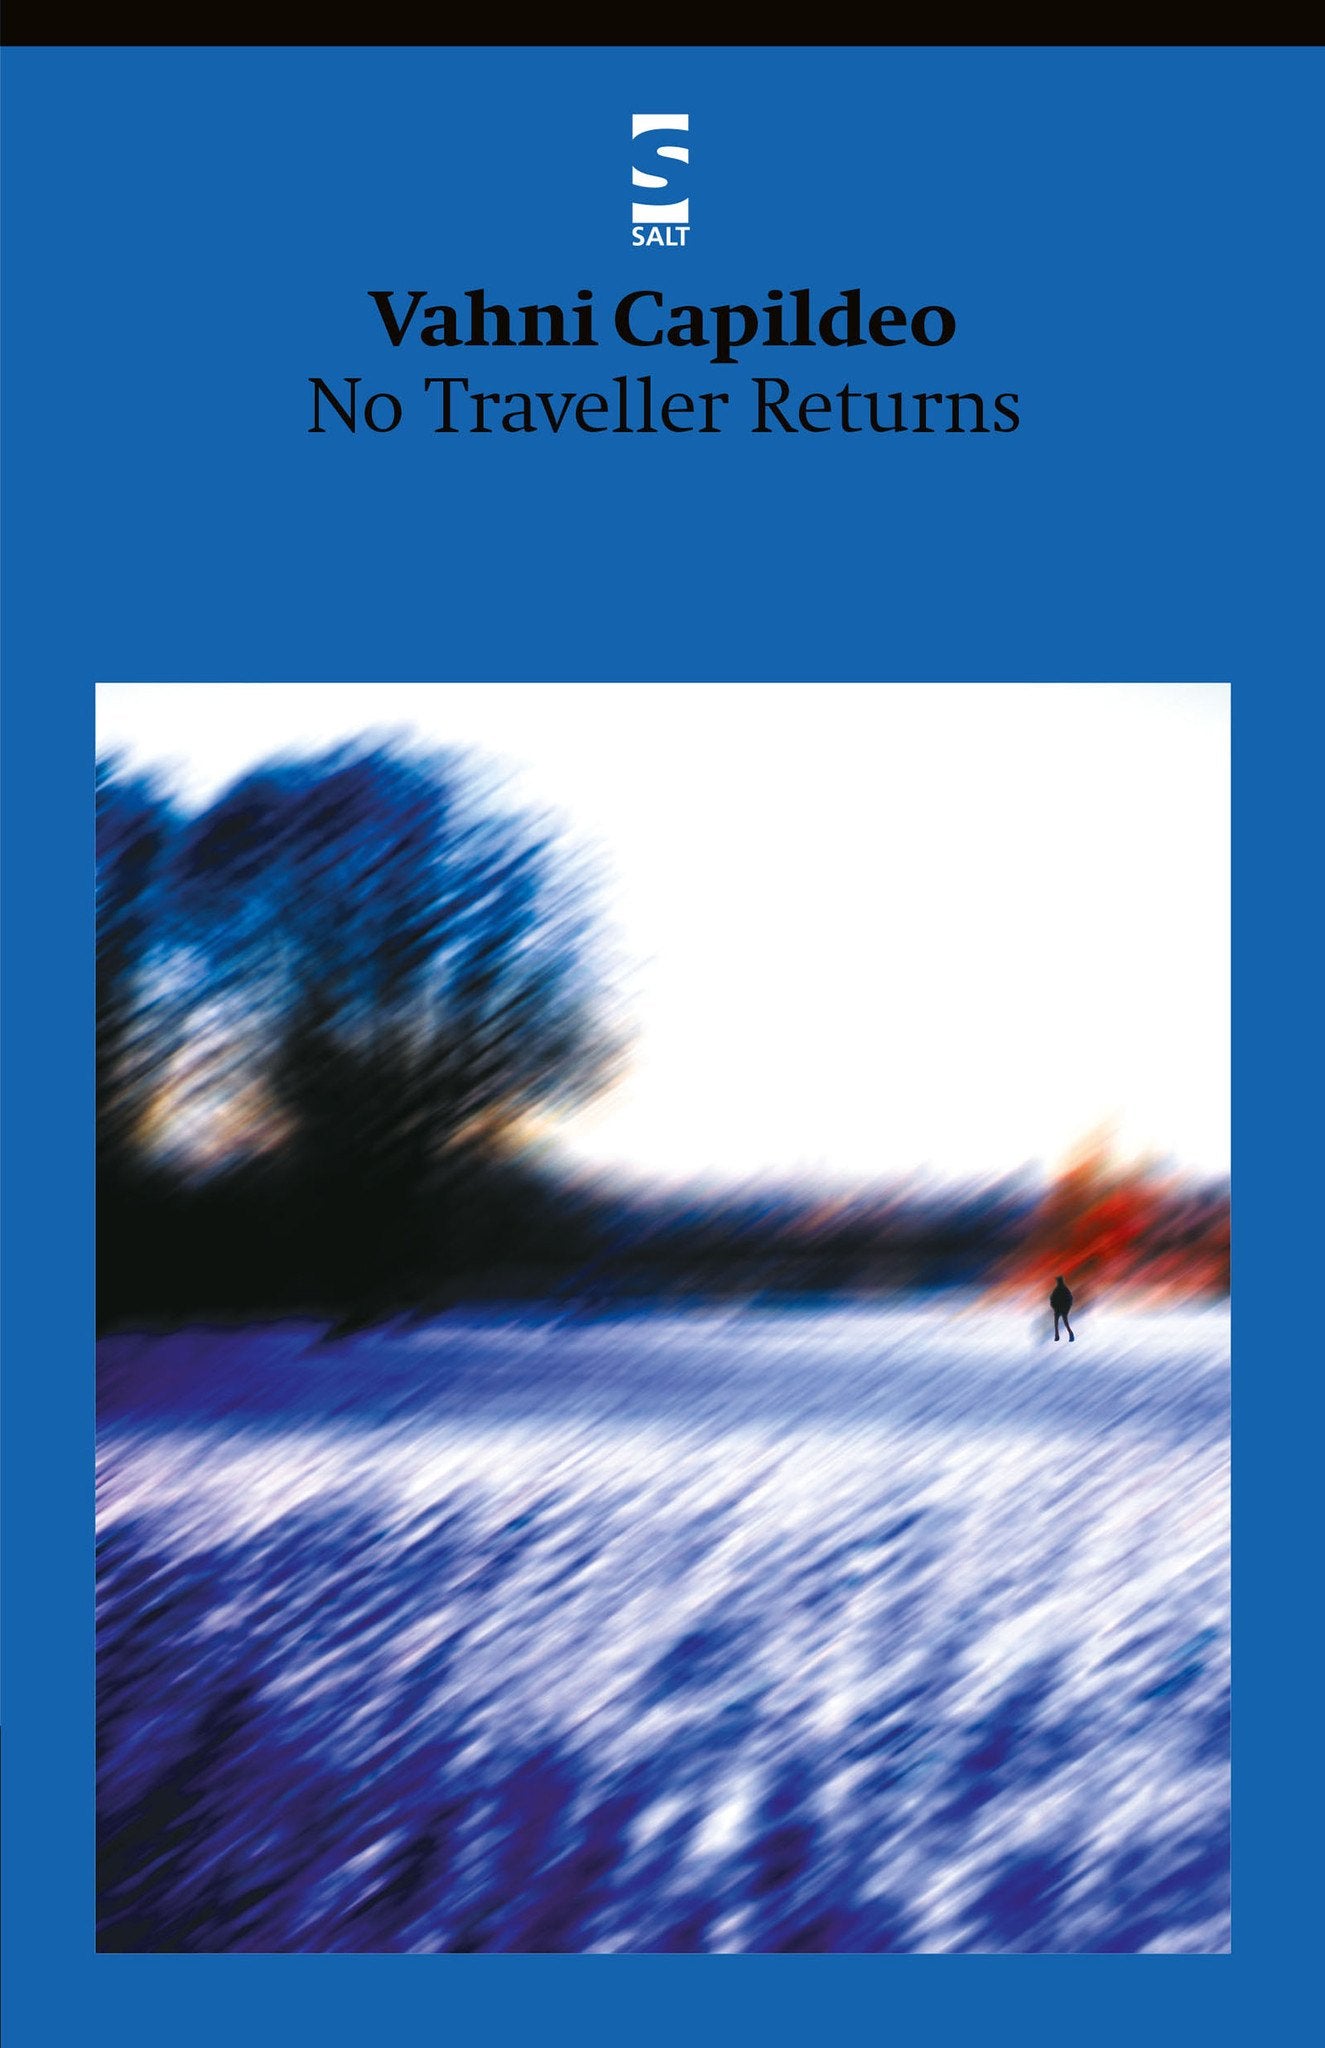 No Traveller Returns - Salt